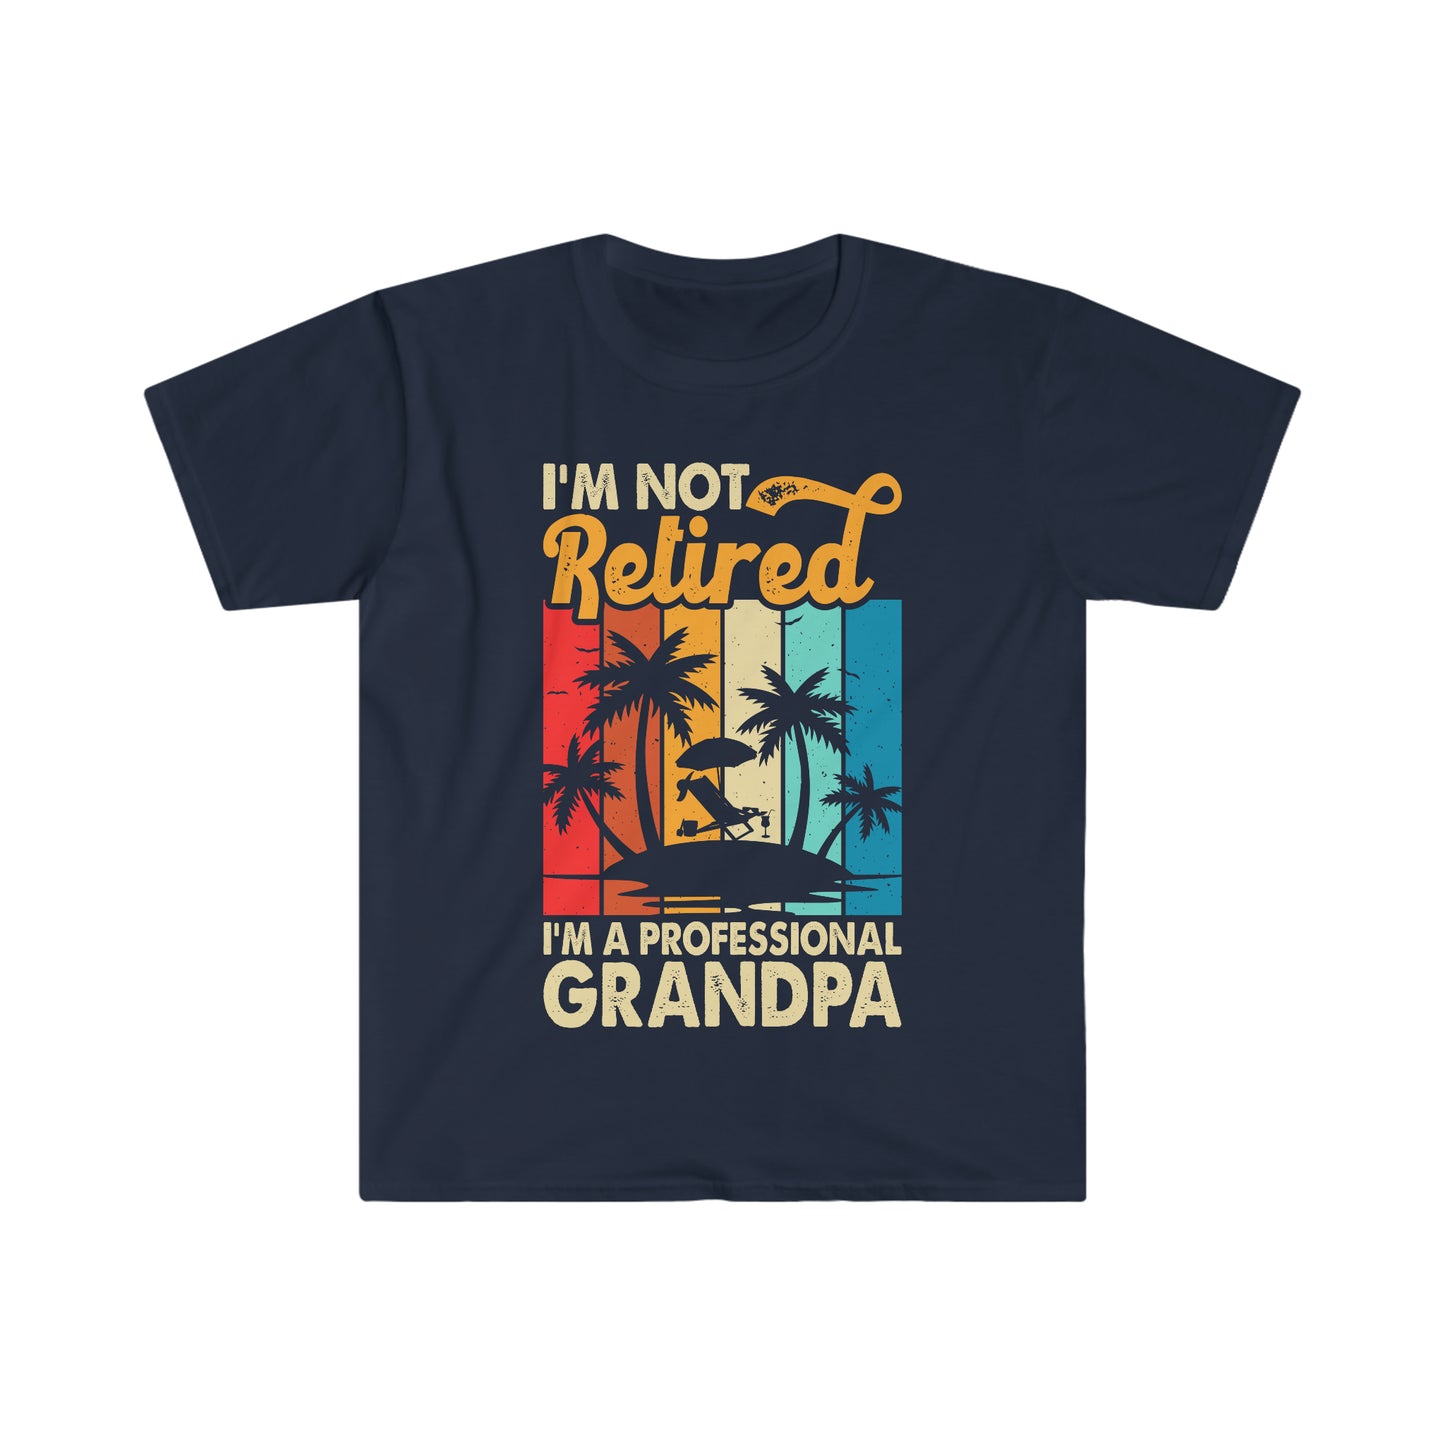 Funny Beach Retirement Shirt for Grandpa